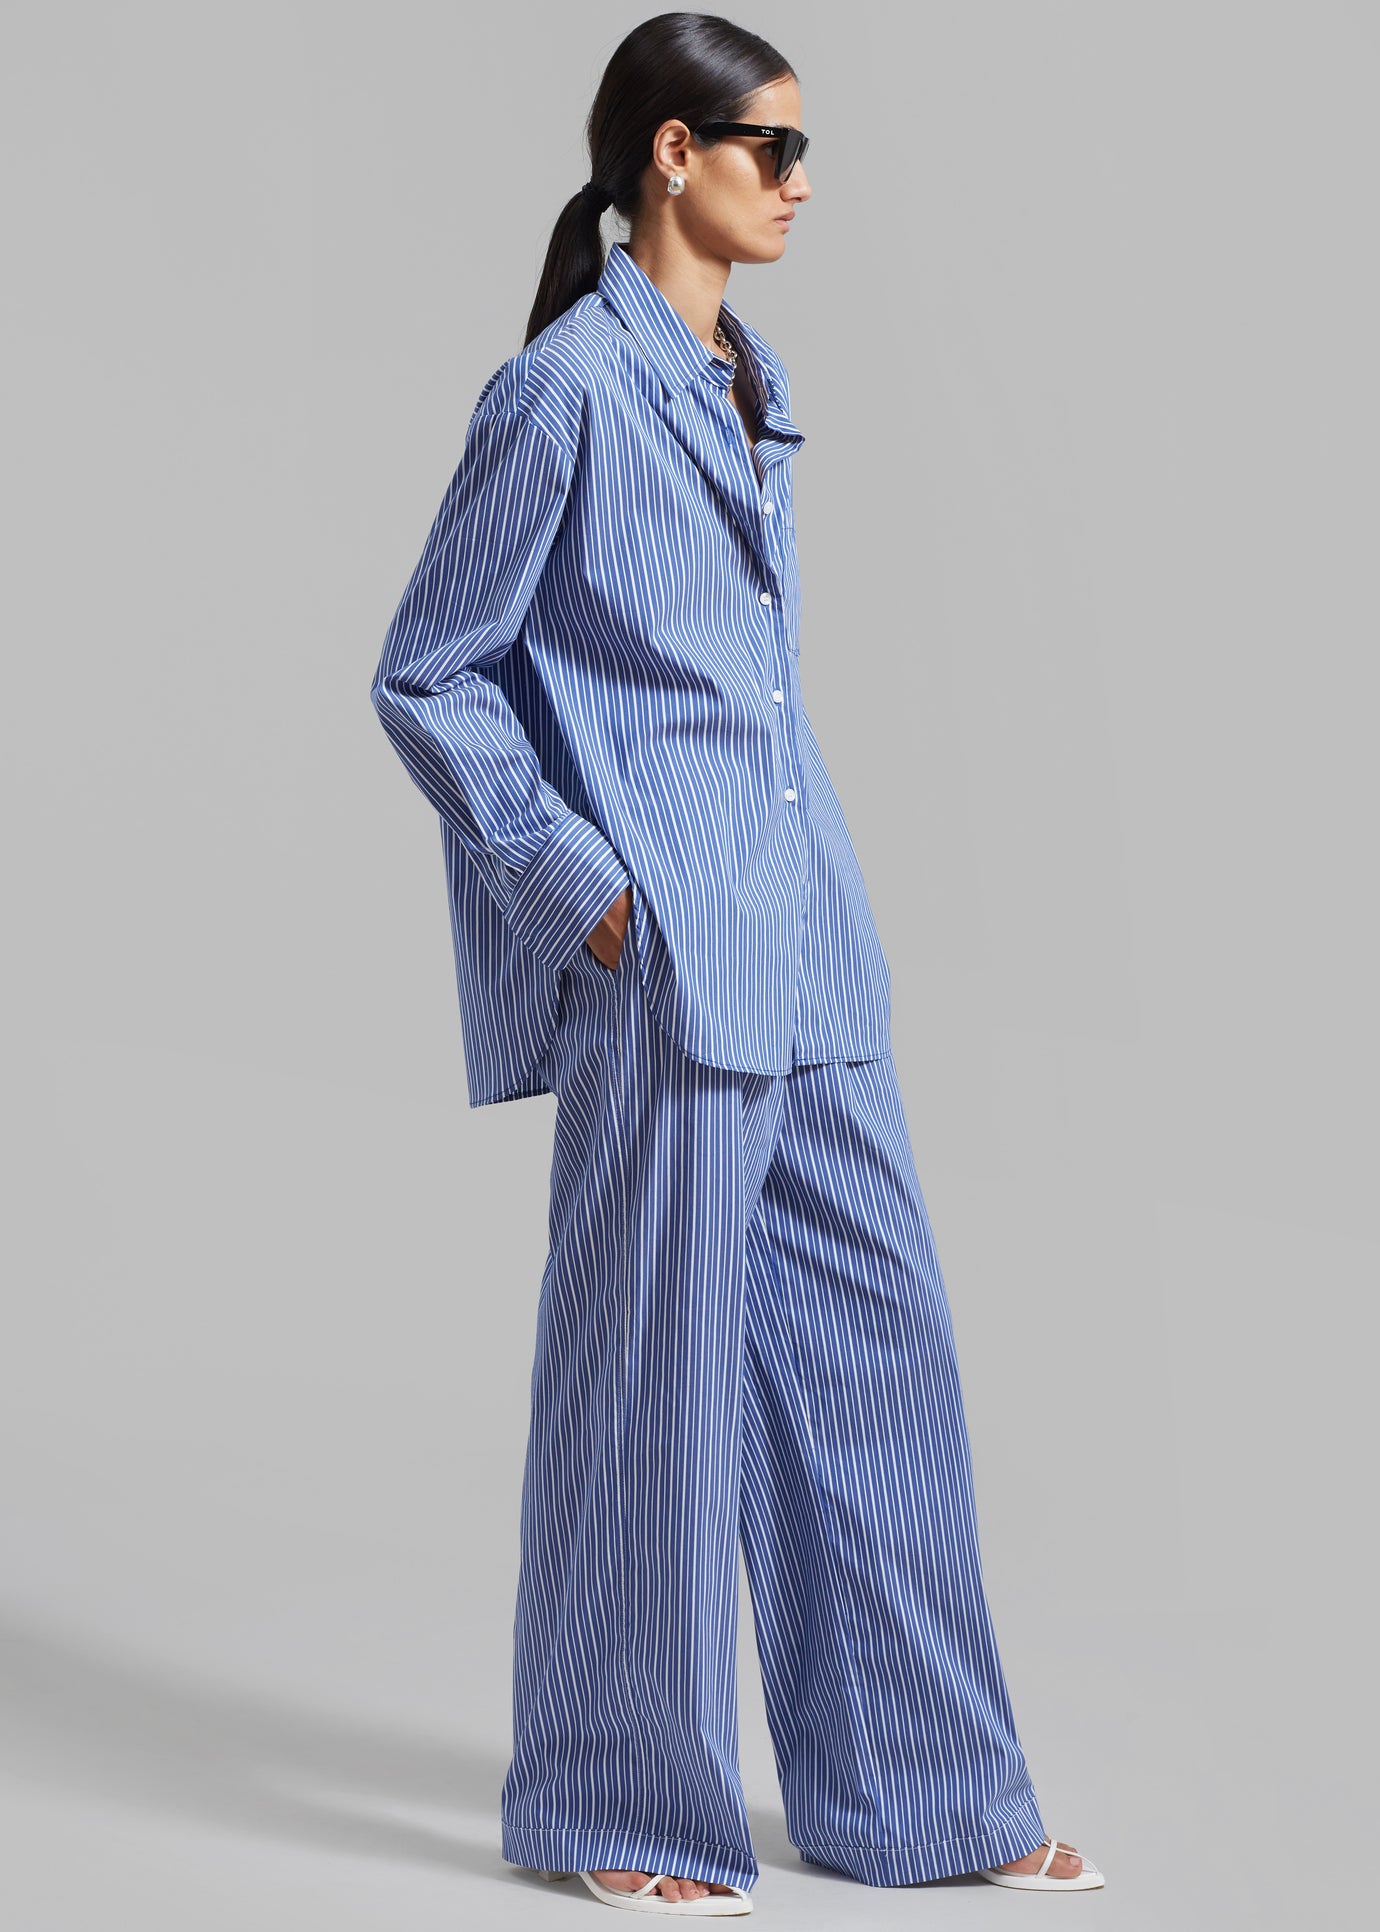 Mirca Elastic Pants - Blue Multi Stripe